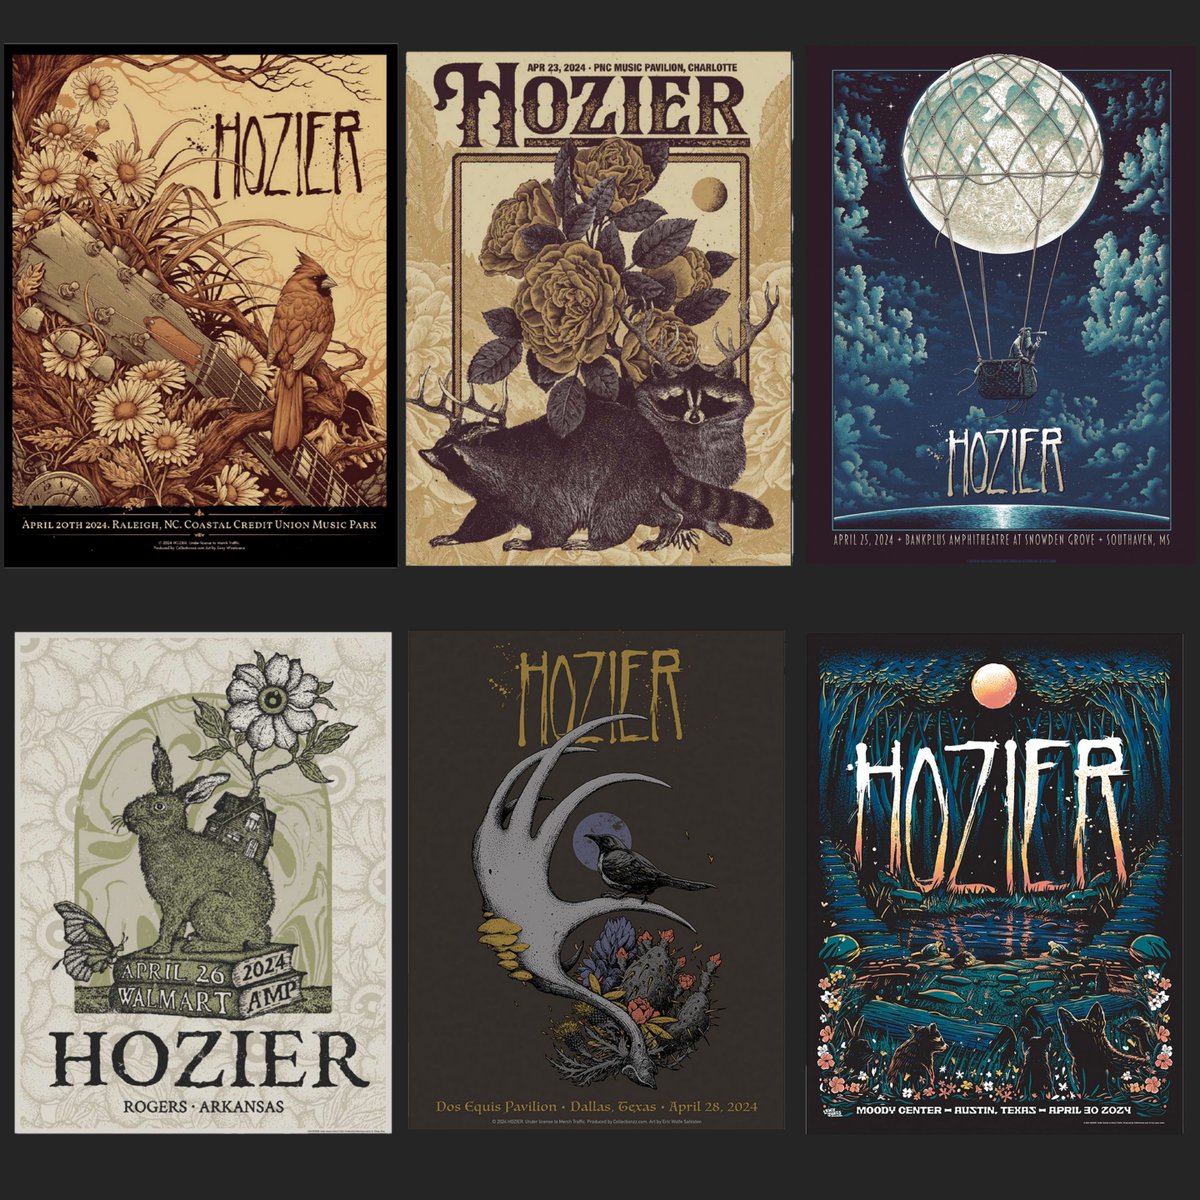 Hozier 2024 Tour posters so far 🔥